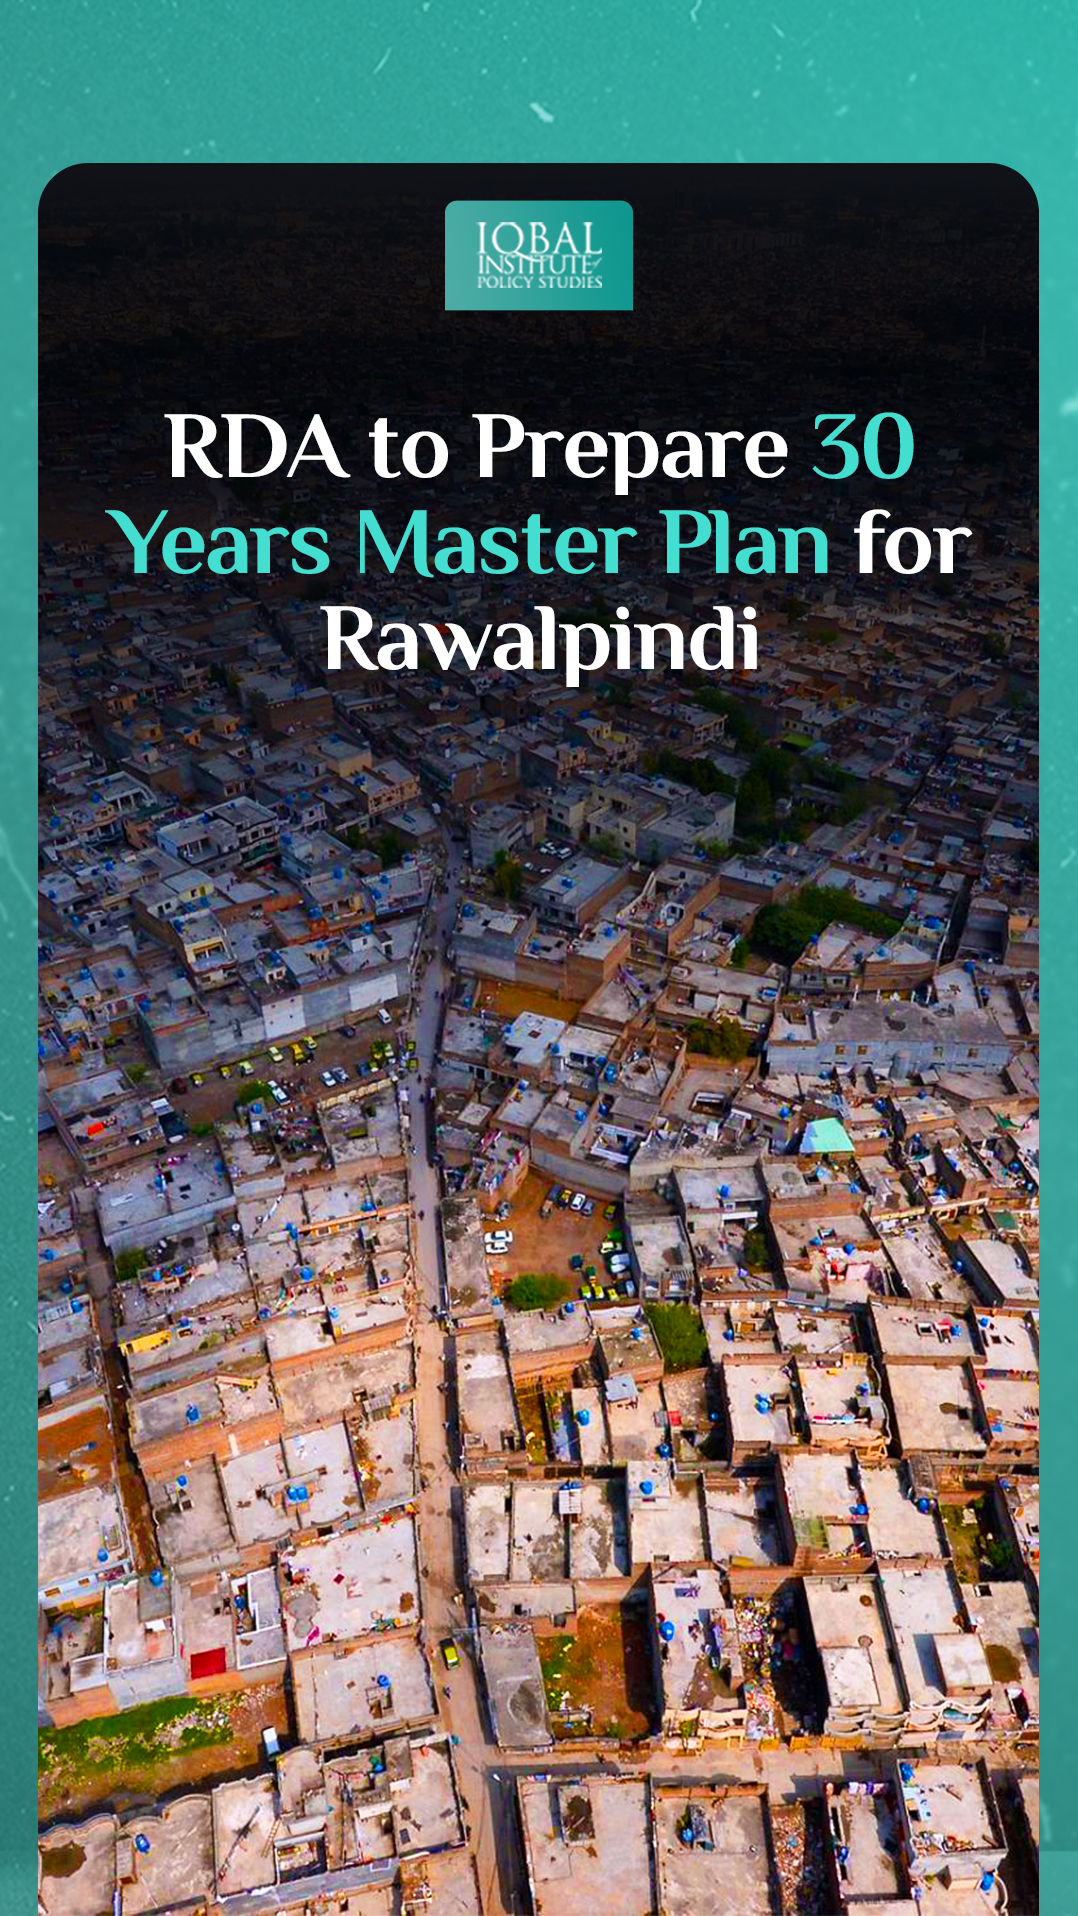 RDA to prepare 30 years master plan for Rawalpindi